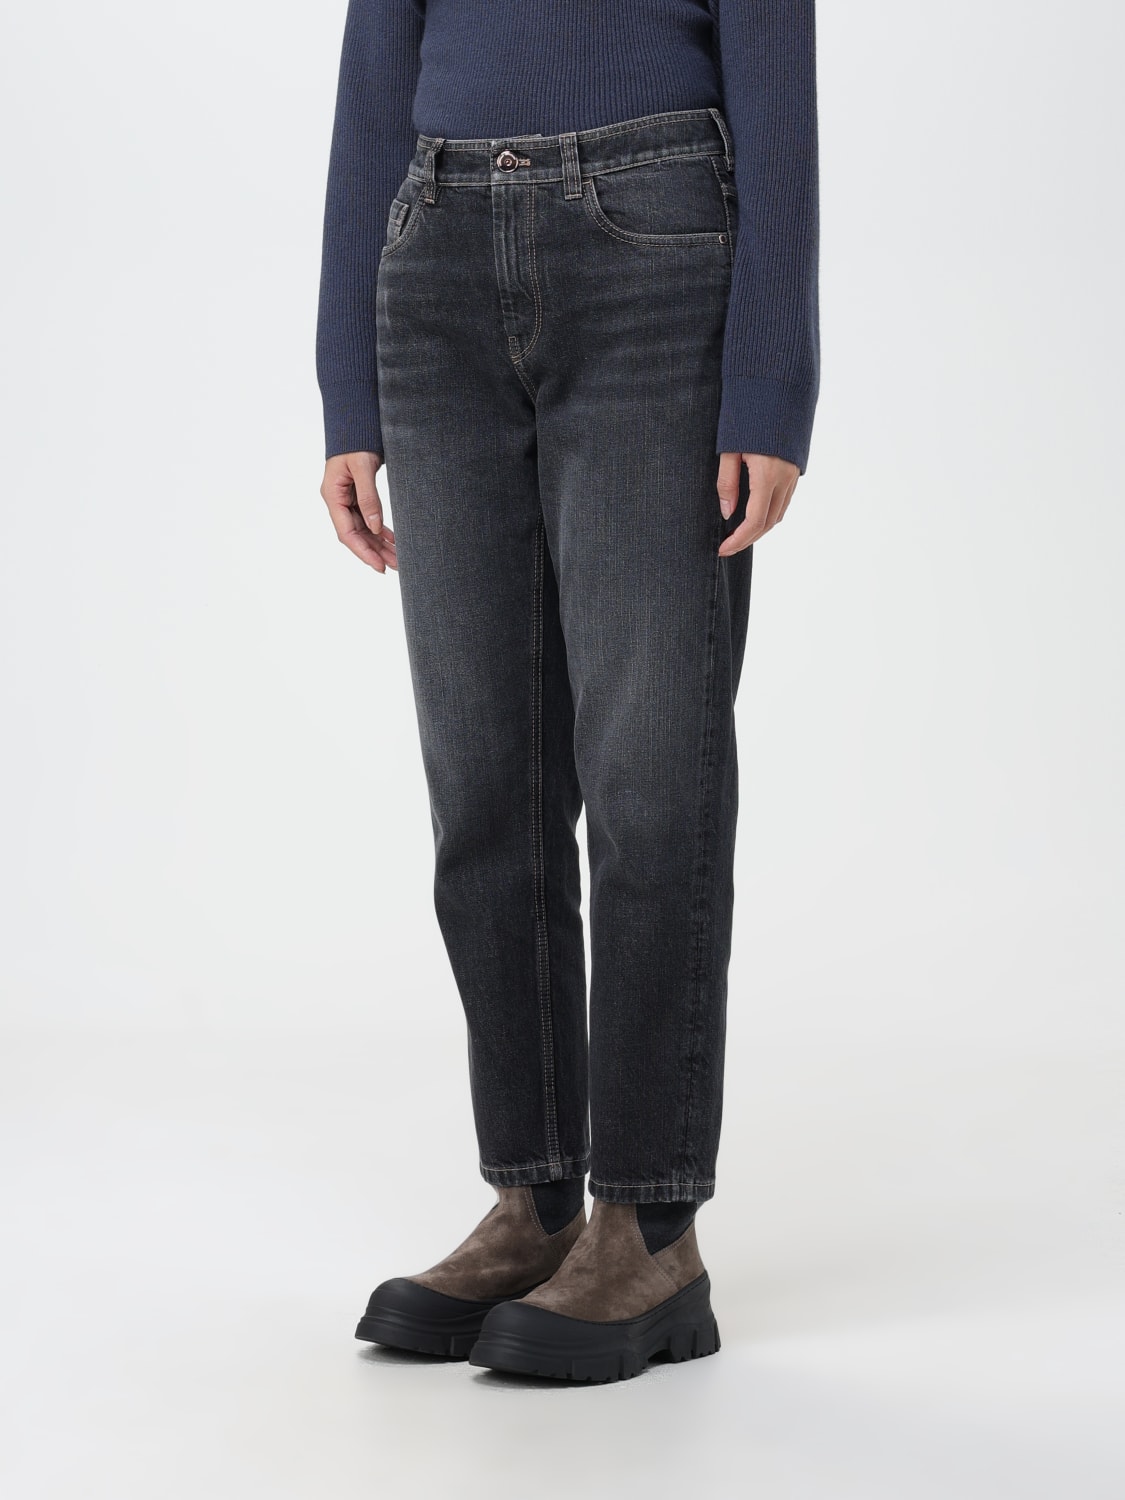 Brunello Cucinelli jeans実寸サイズを教えて下さい